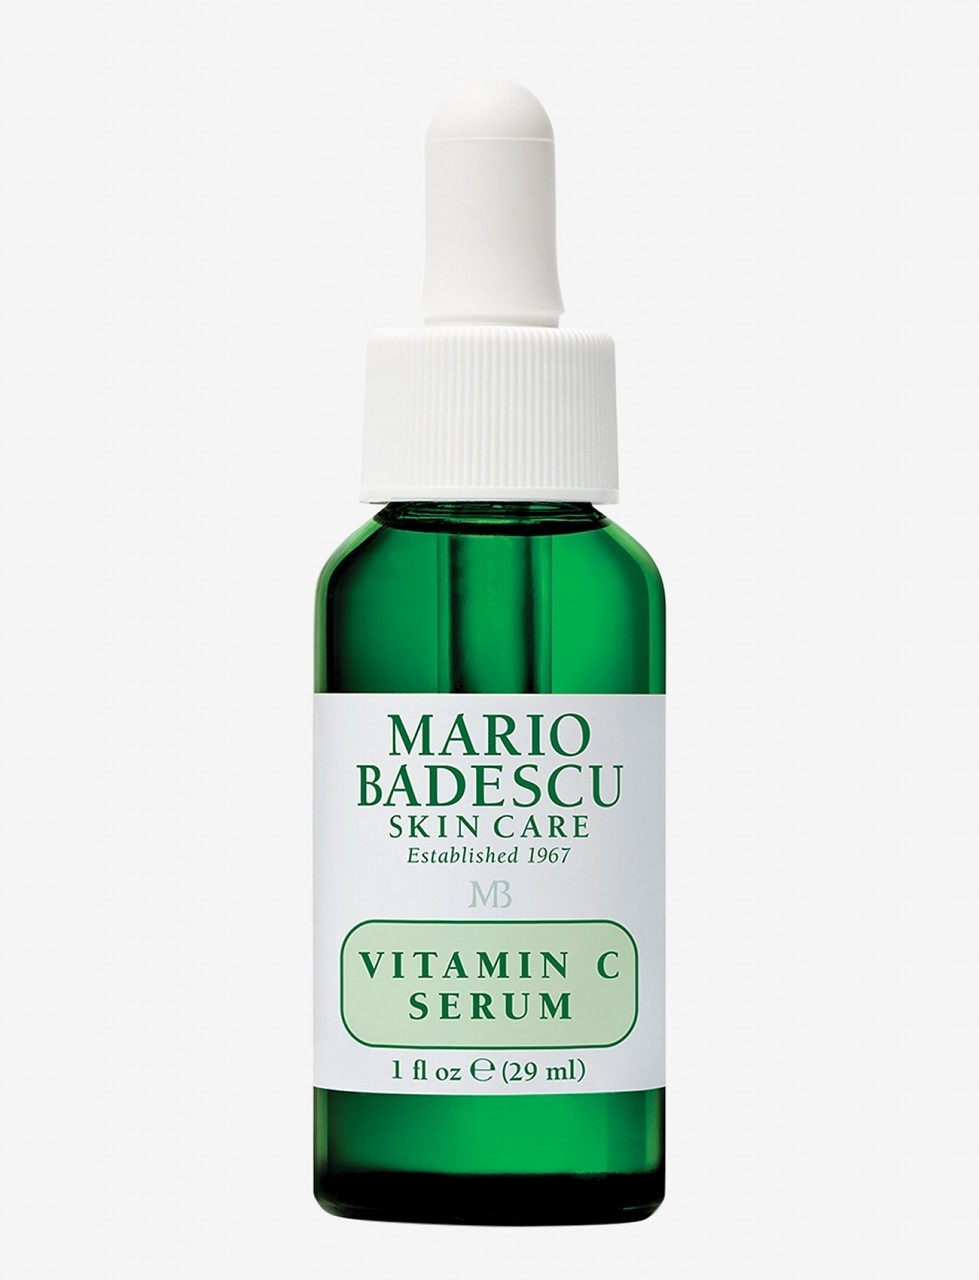 Mario Badescu Skin Care Vitamin C Serum- 1 fl oz.